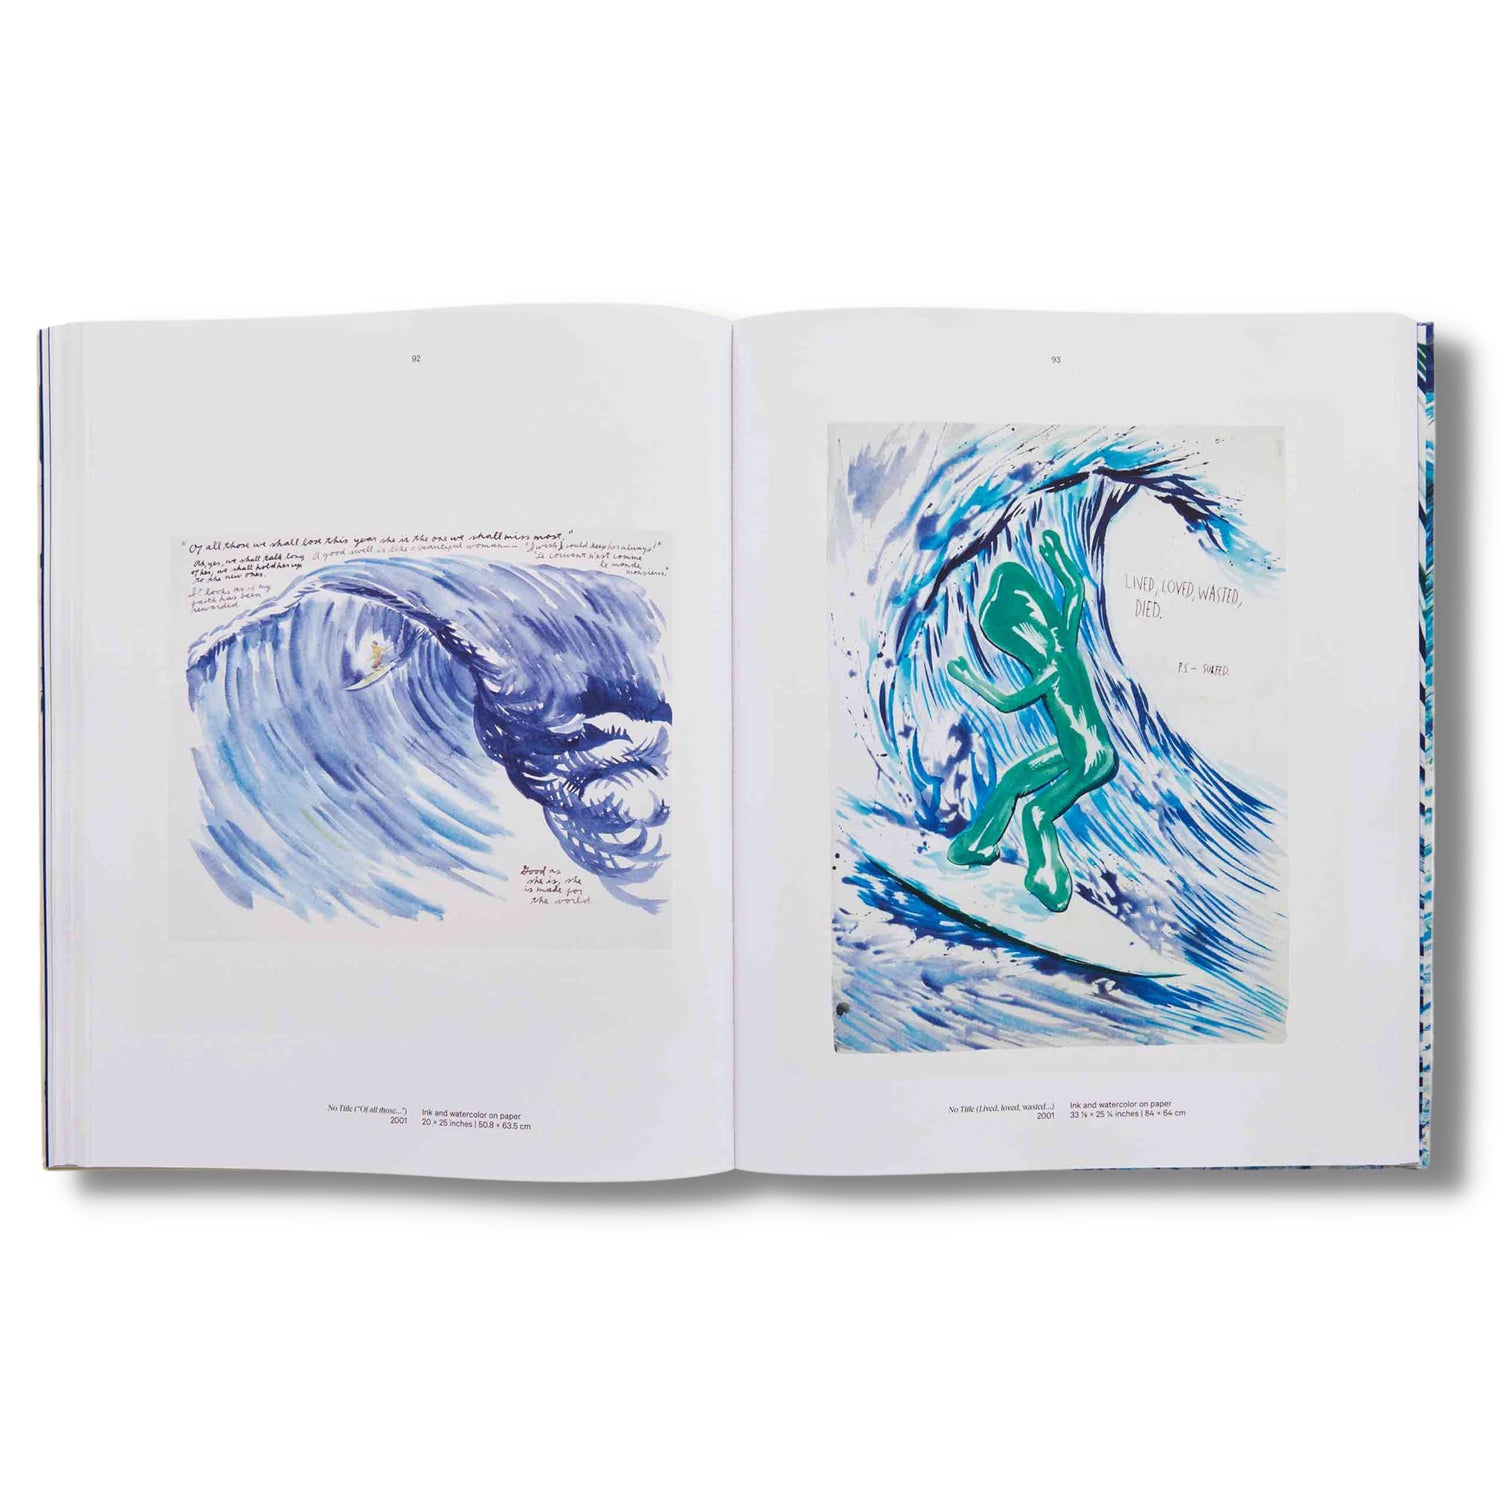 POINT BREAK - Raymond Pettibon, Surfers and Waves - REBEL FIN CO.